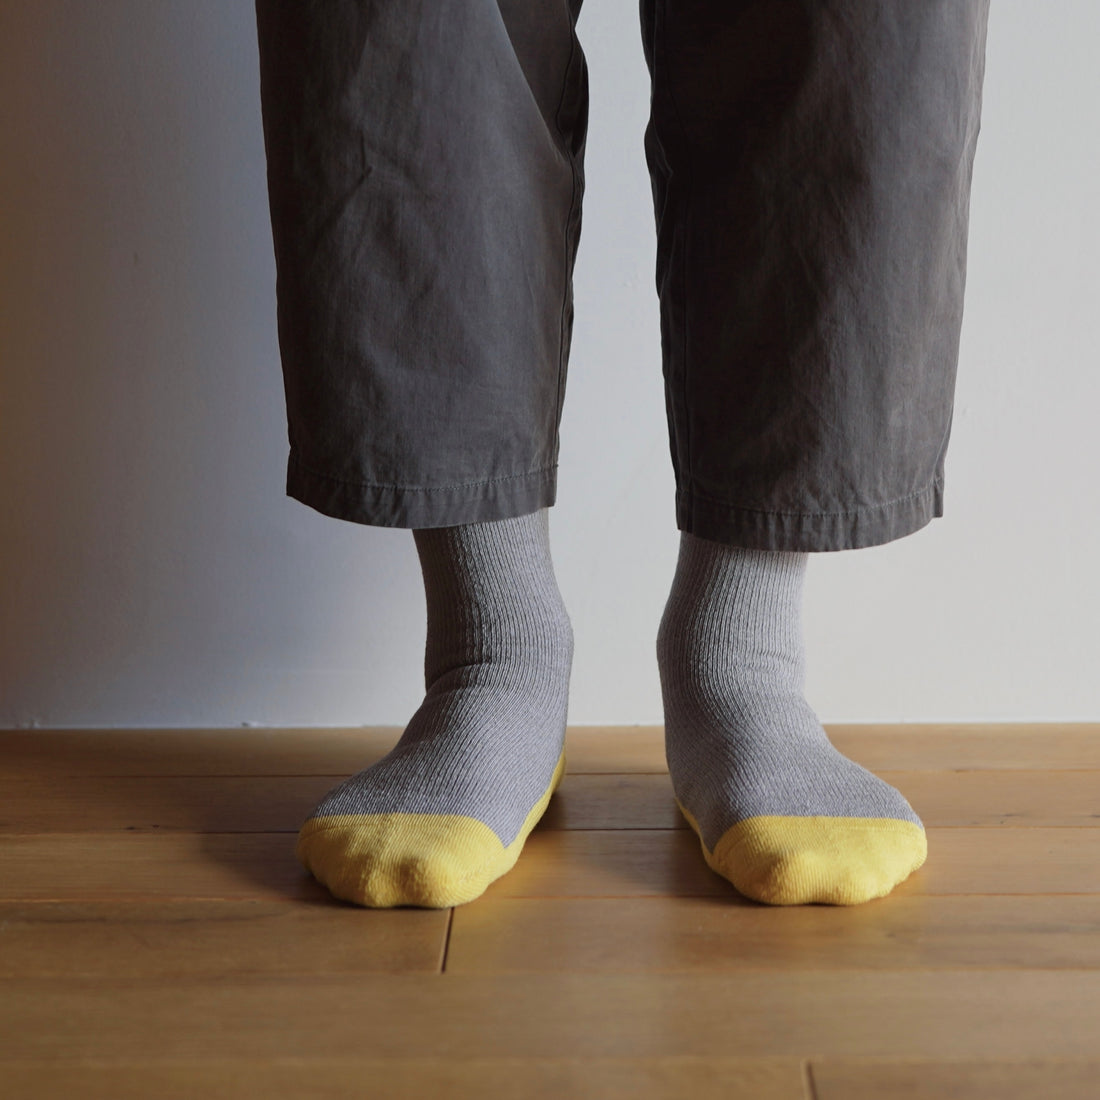 Nishiguchi Kutsushita Wool Pile Trail Socks - Grey and Yellow